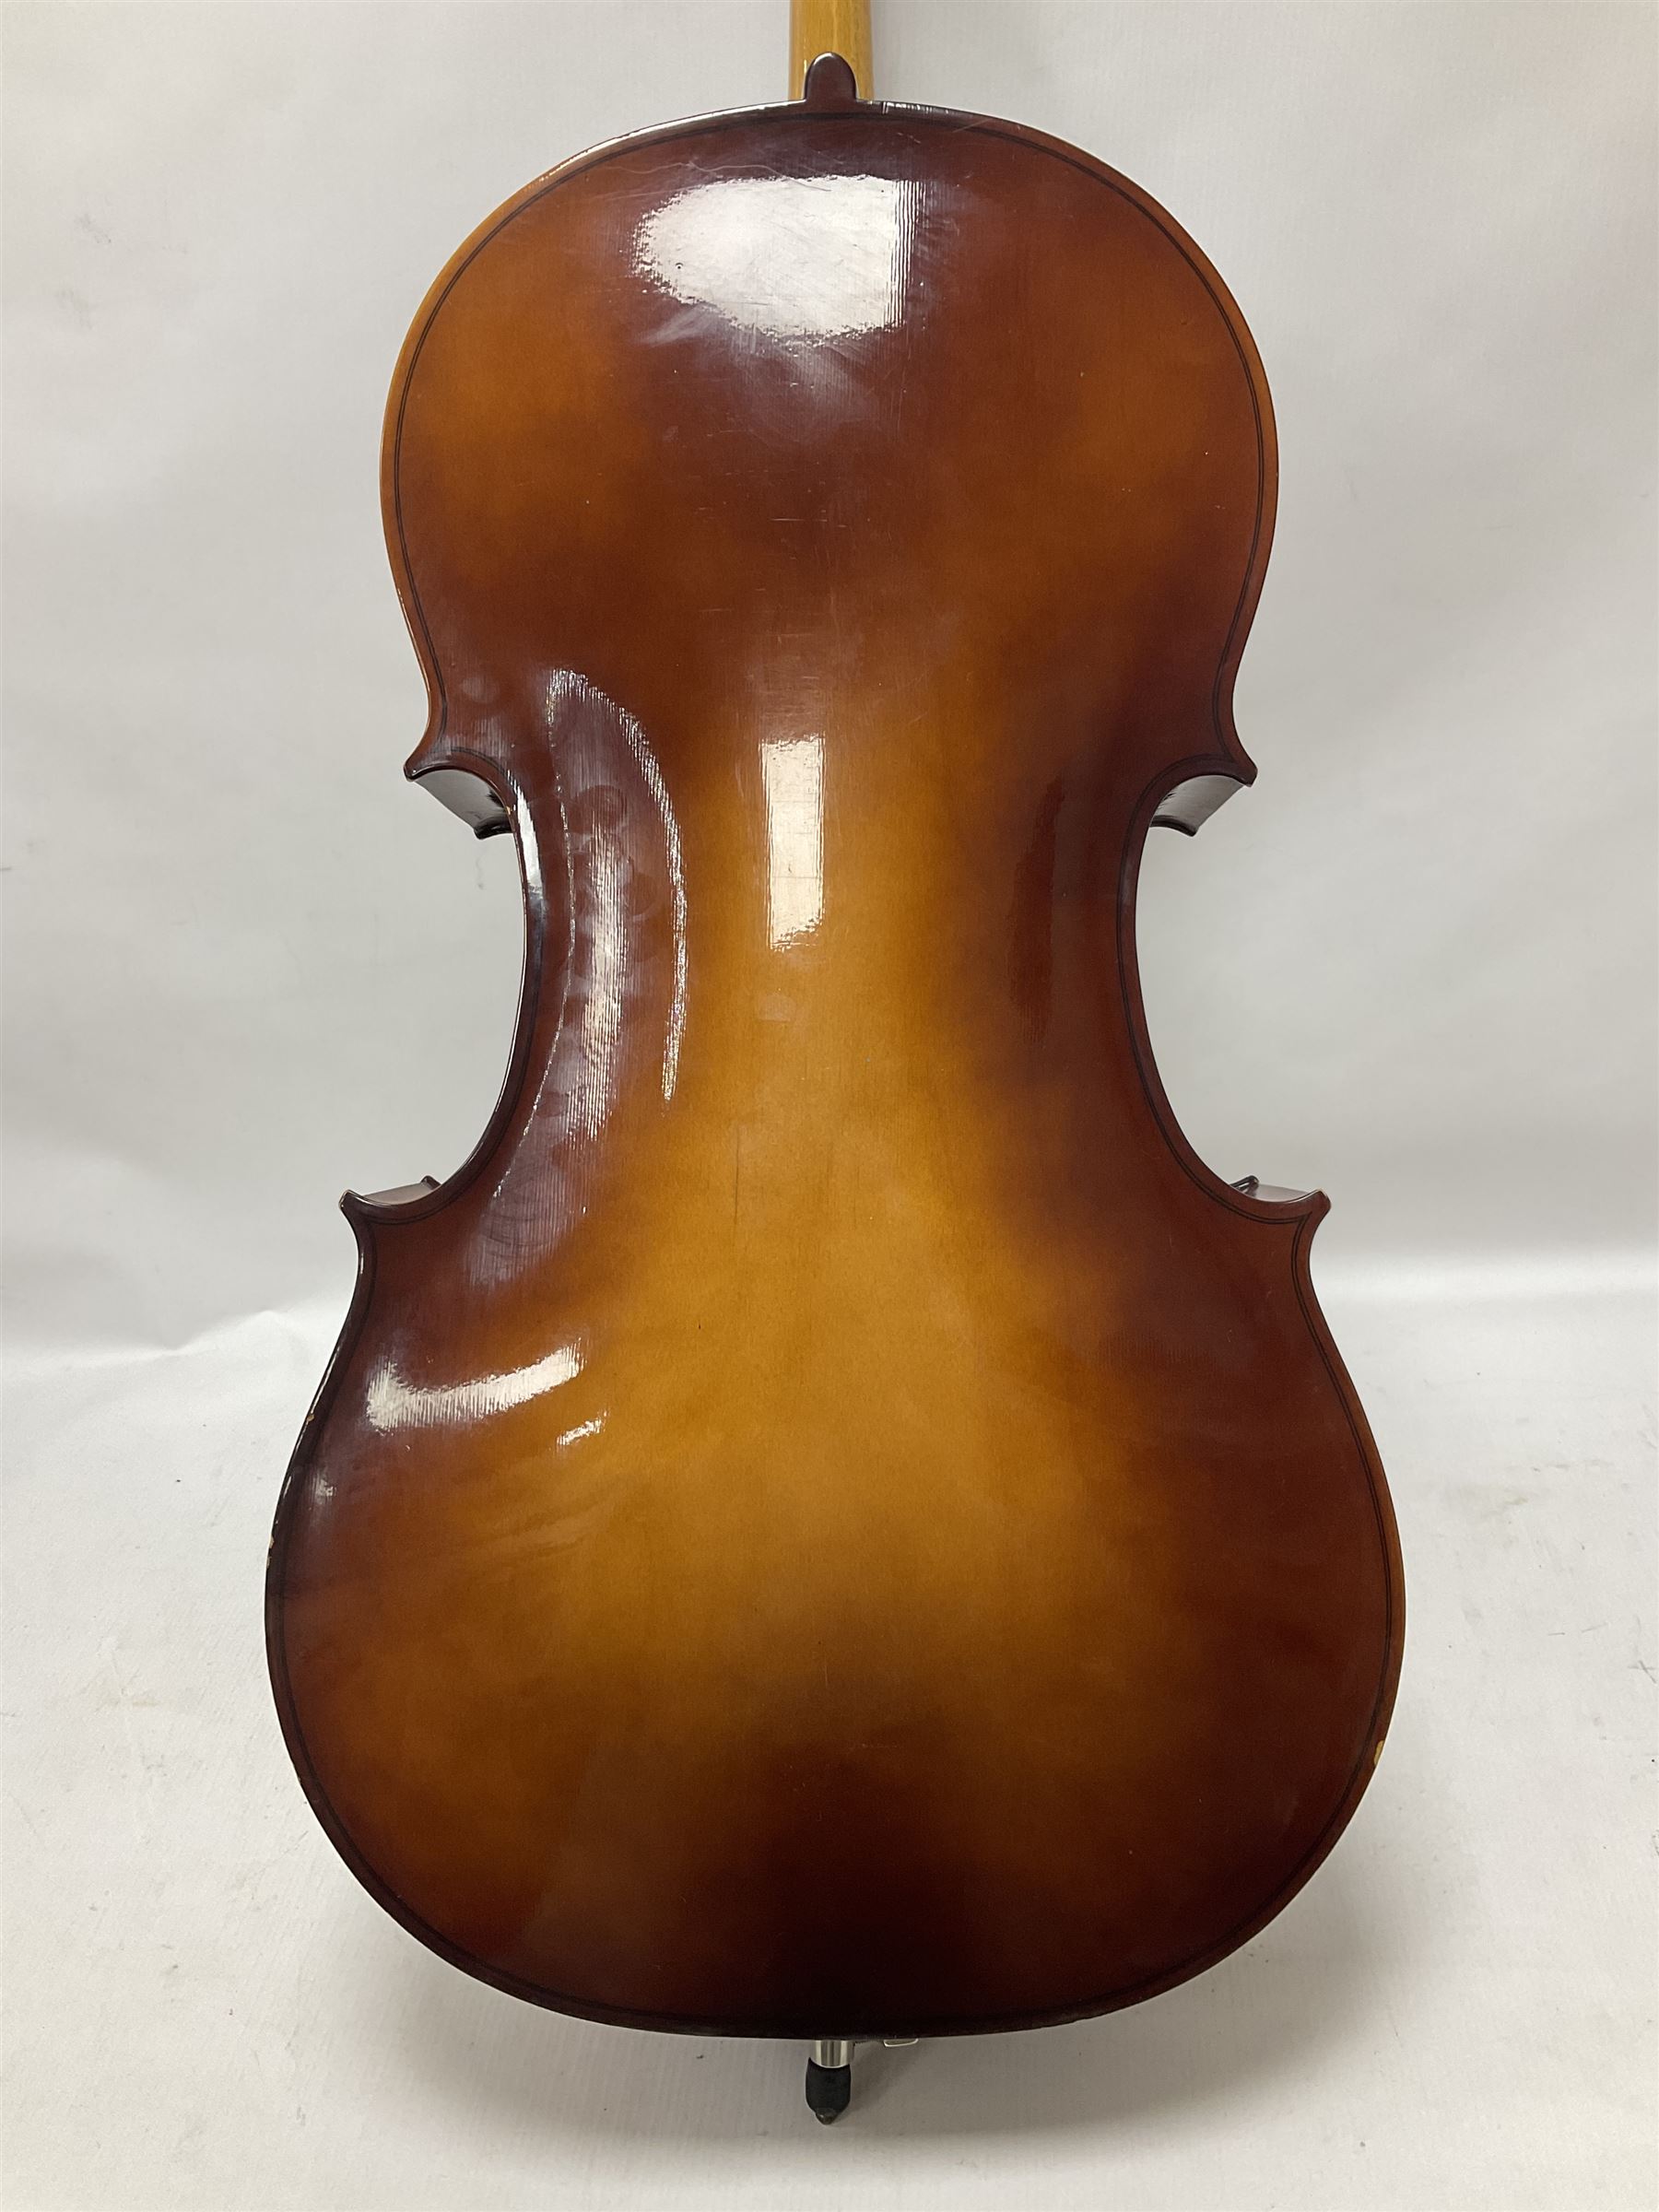 1974 German half size cello - Image 13 of 16